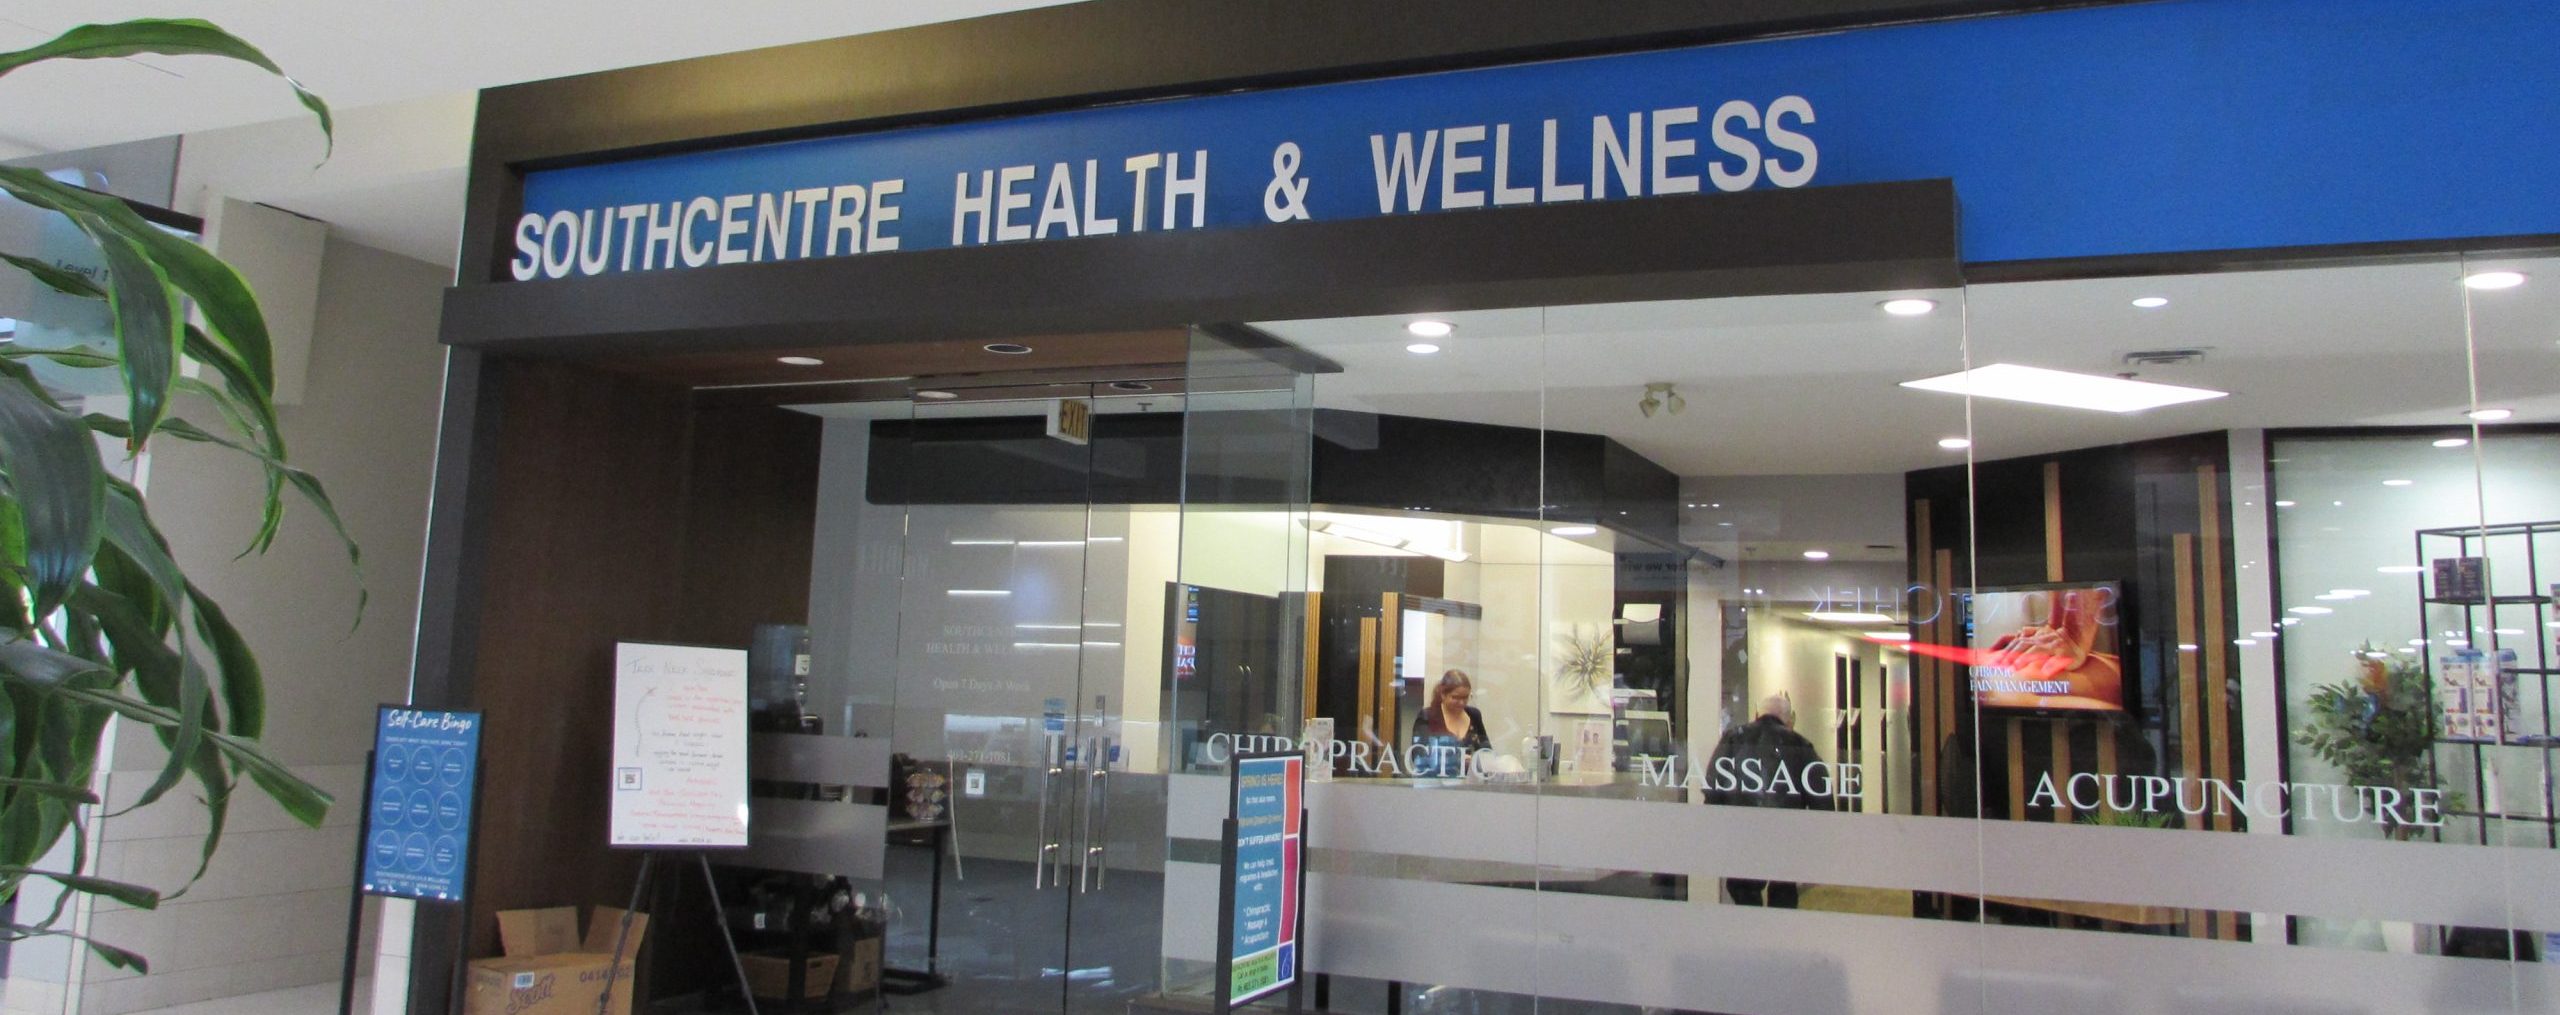 SouthCentre_health_wellness_clinic_calgary